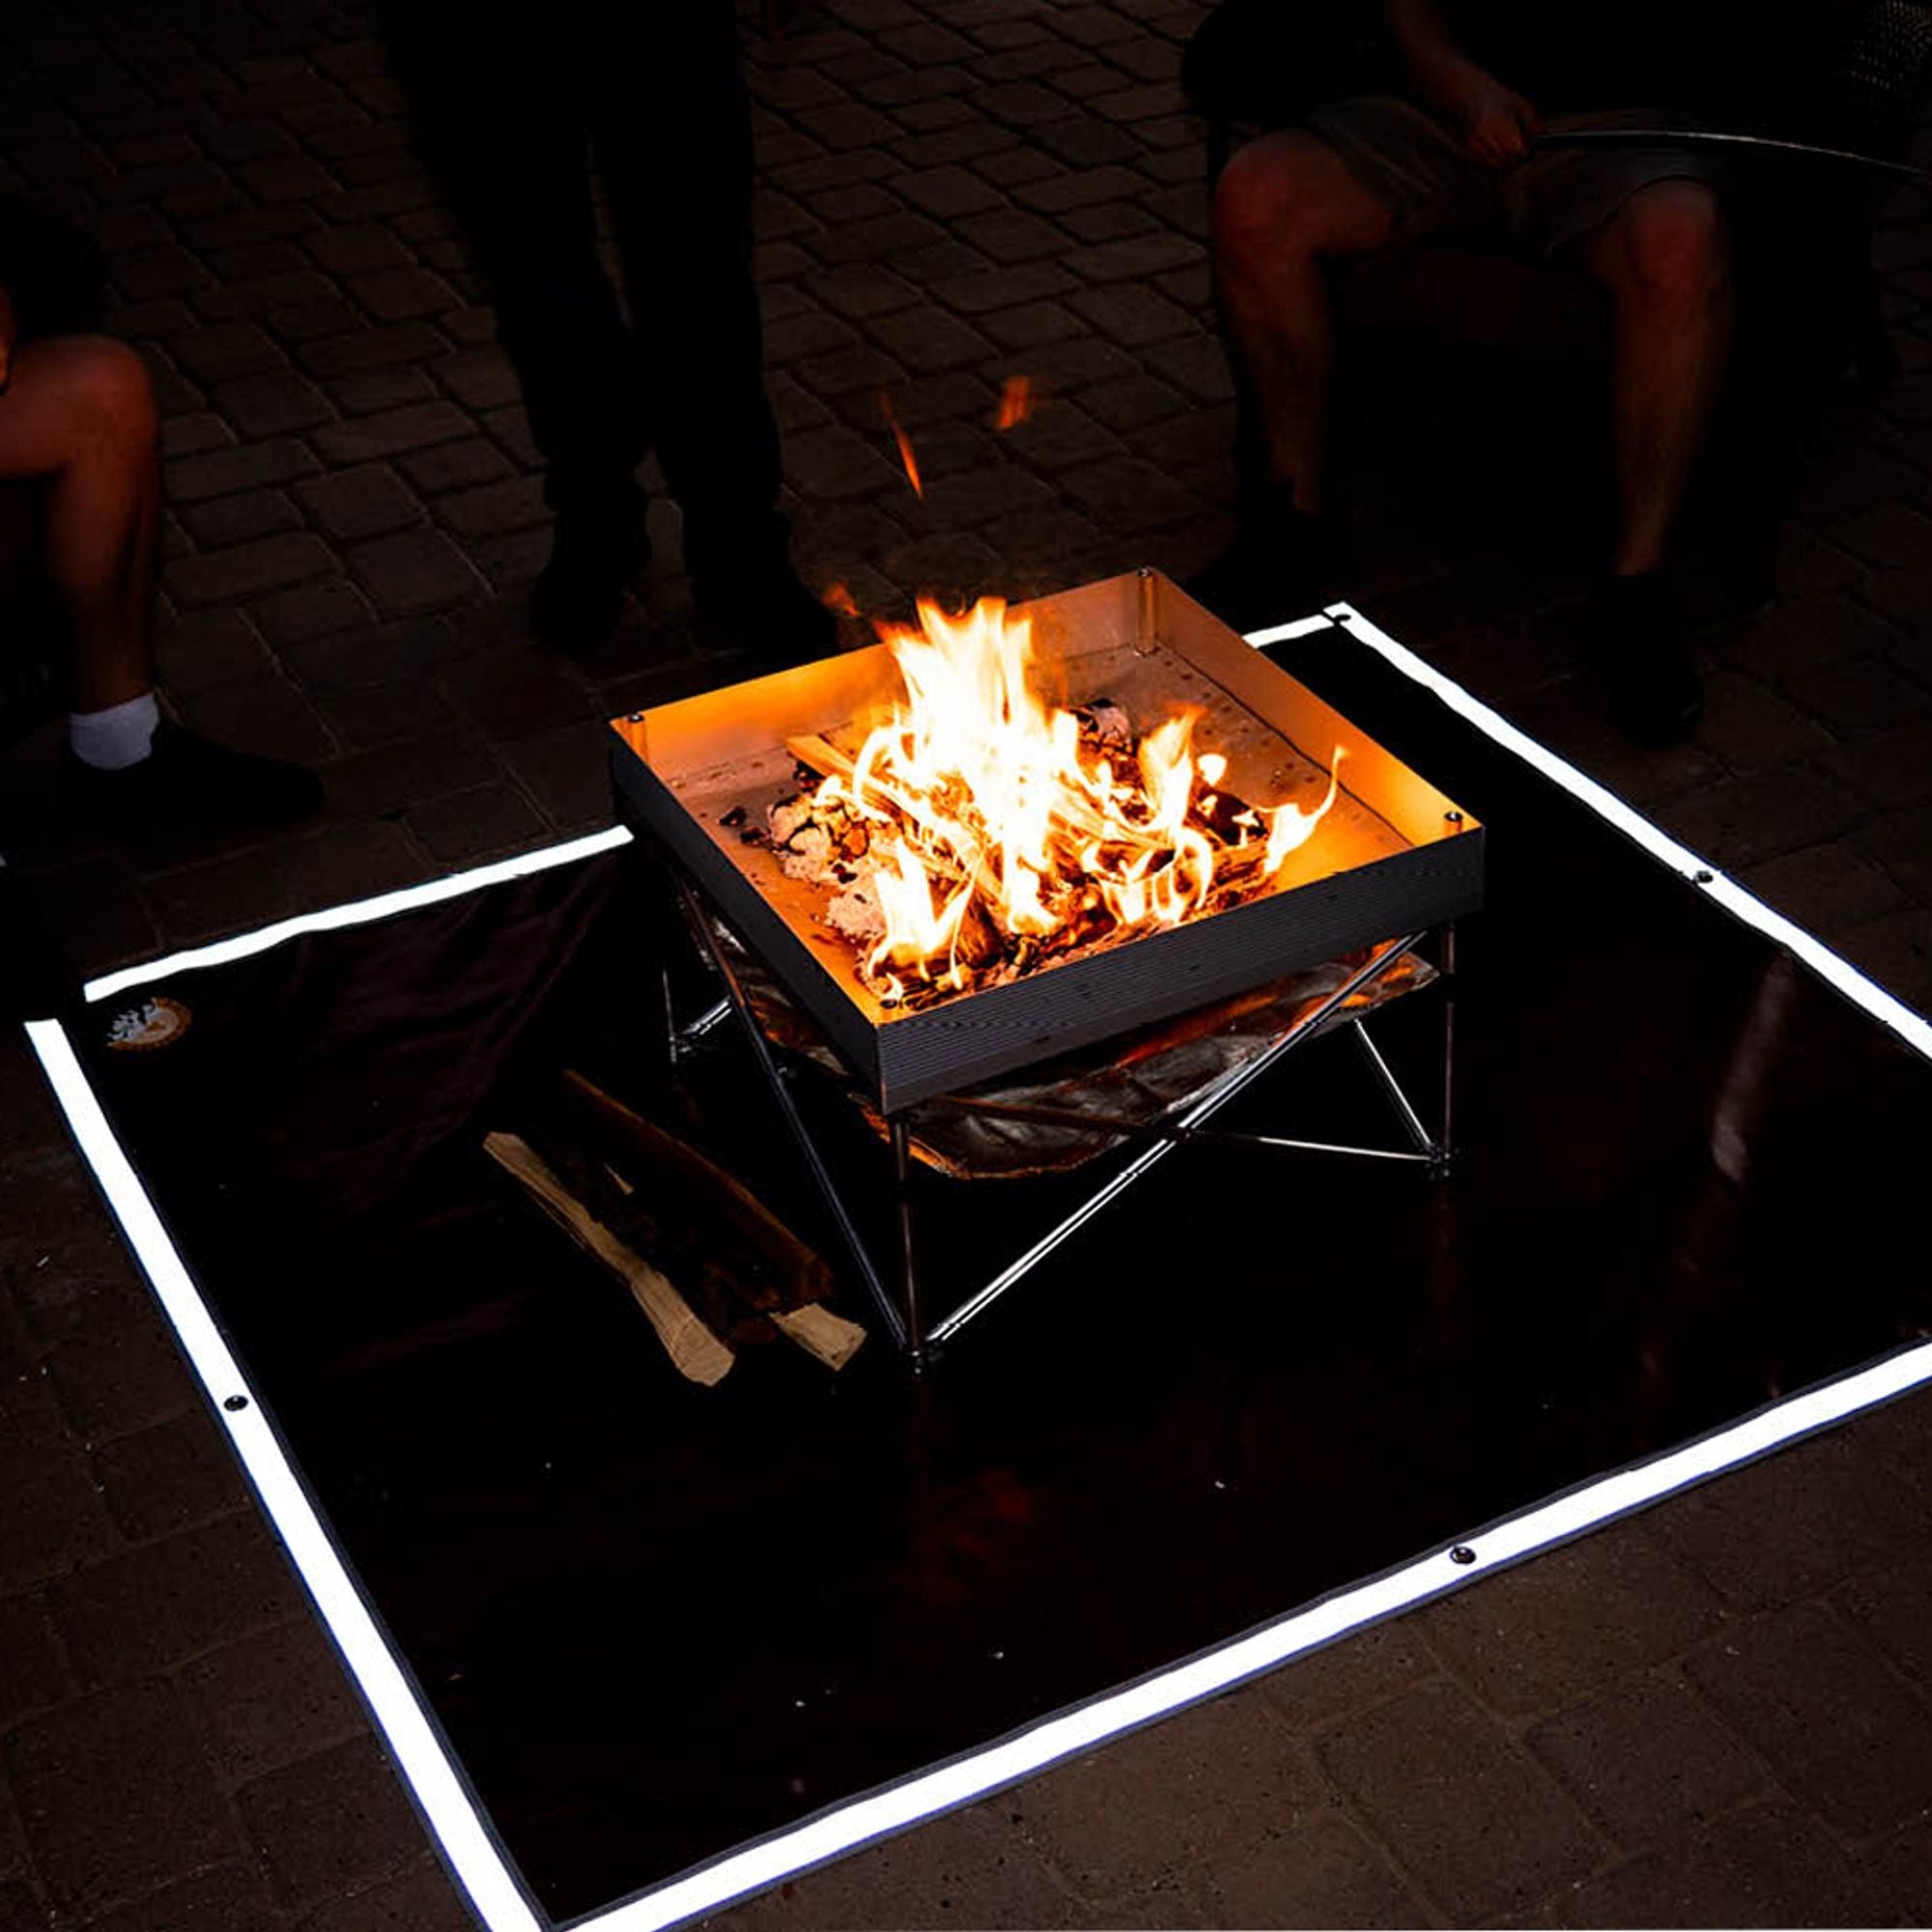 Fireside Ember Mat